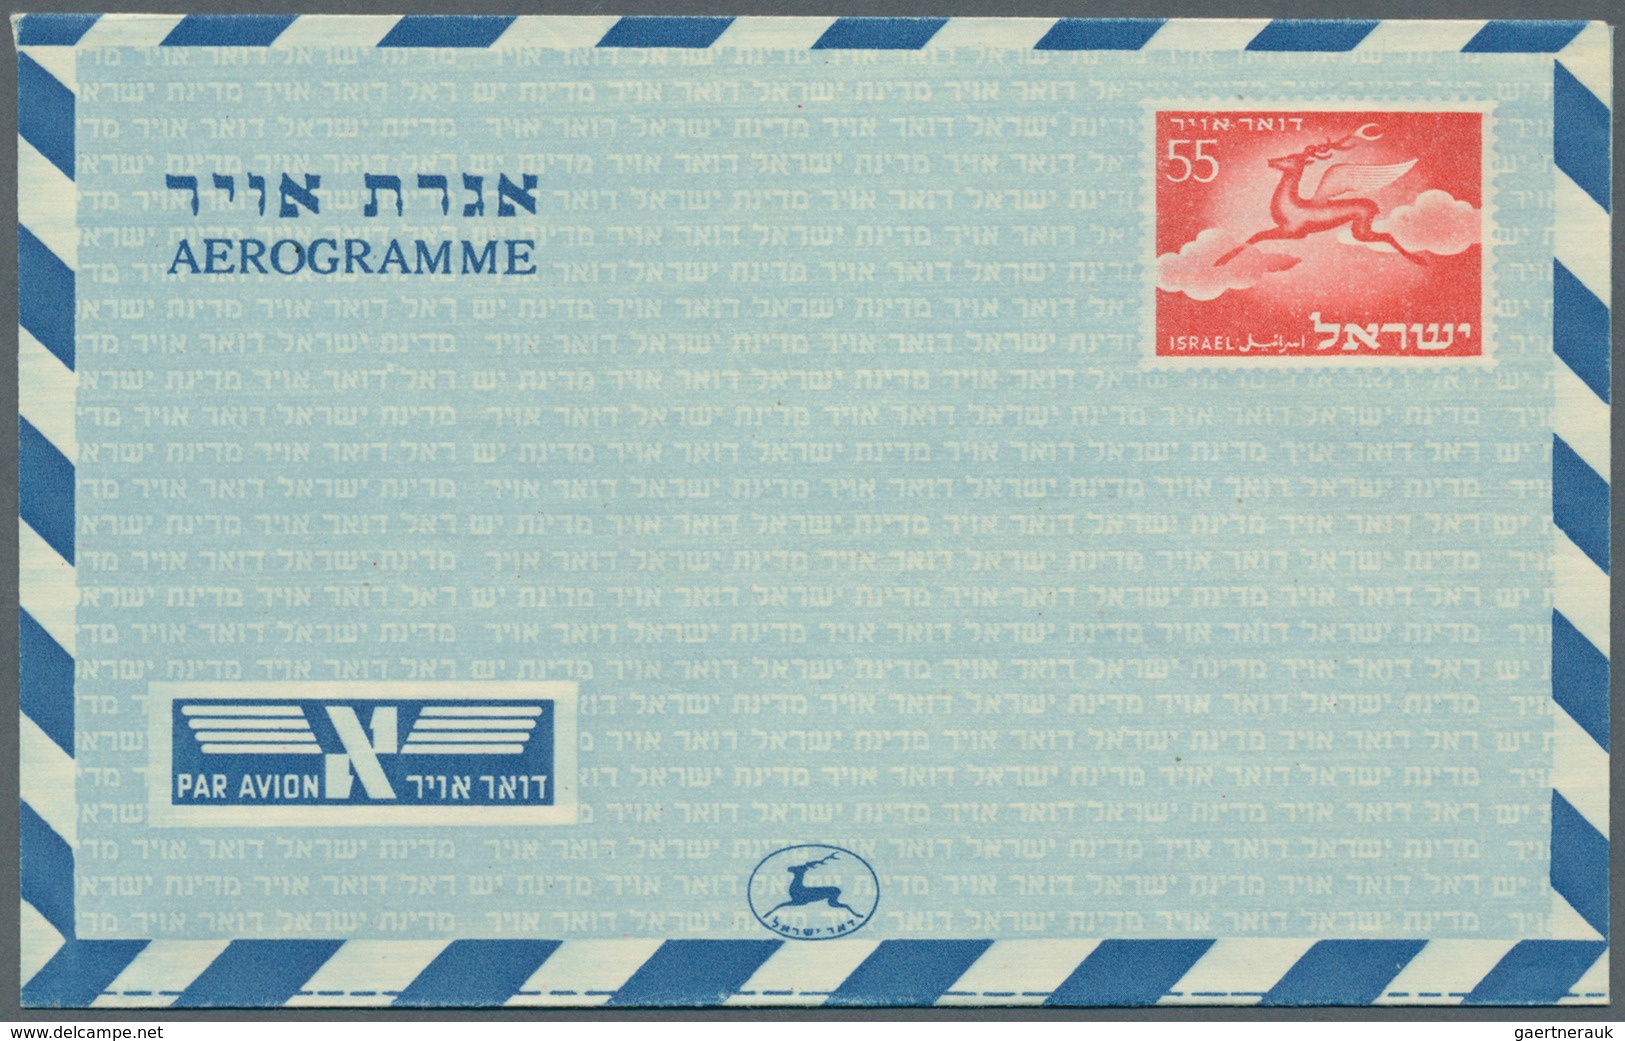 Israel: 1950/1973 (ca.), AEROGRAMMES: accumulation with approx. 900 unused and used/CTO aerogrammes